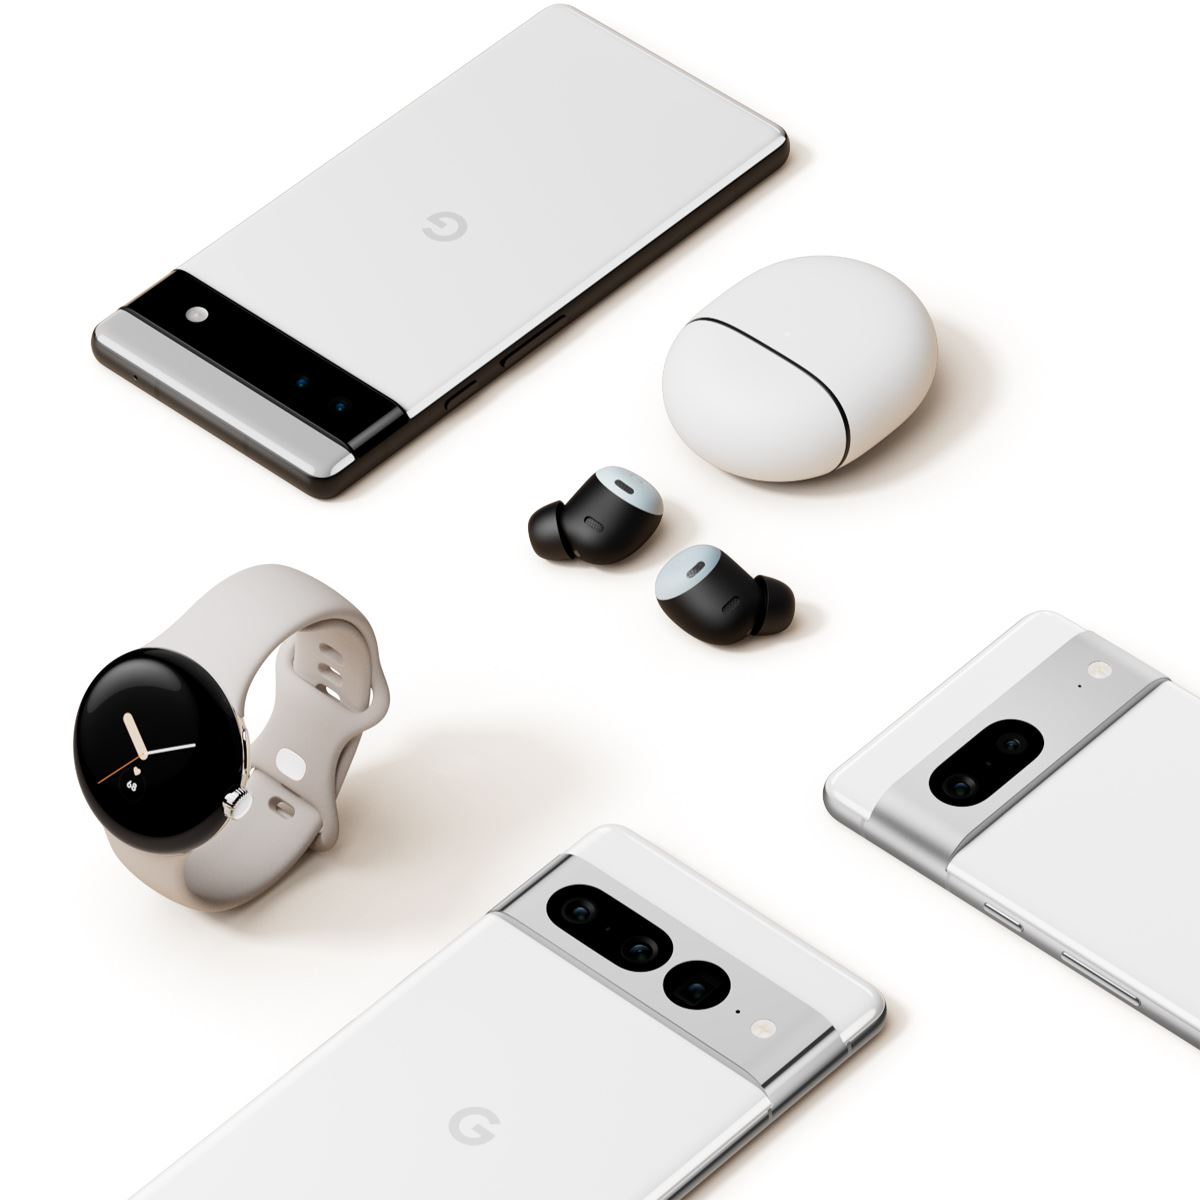 Googleが「Pixel 6a」や「Pixel Watch」など多数のハードウェア製品を